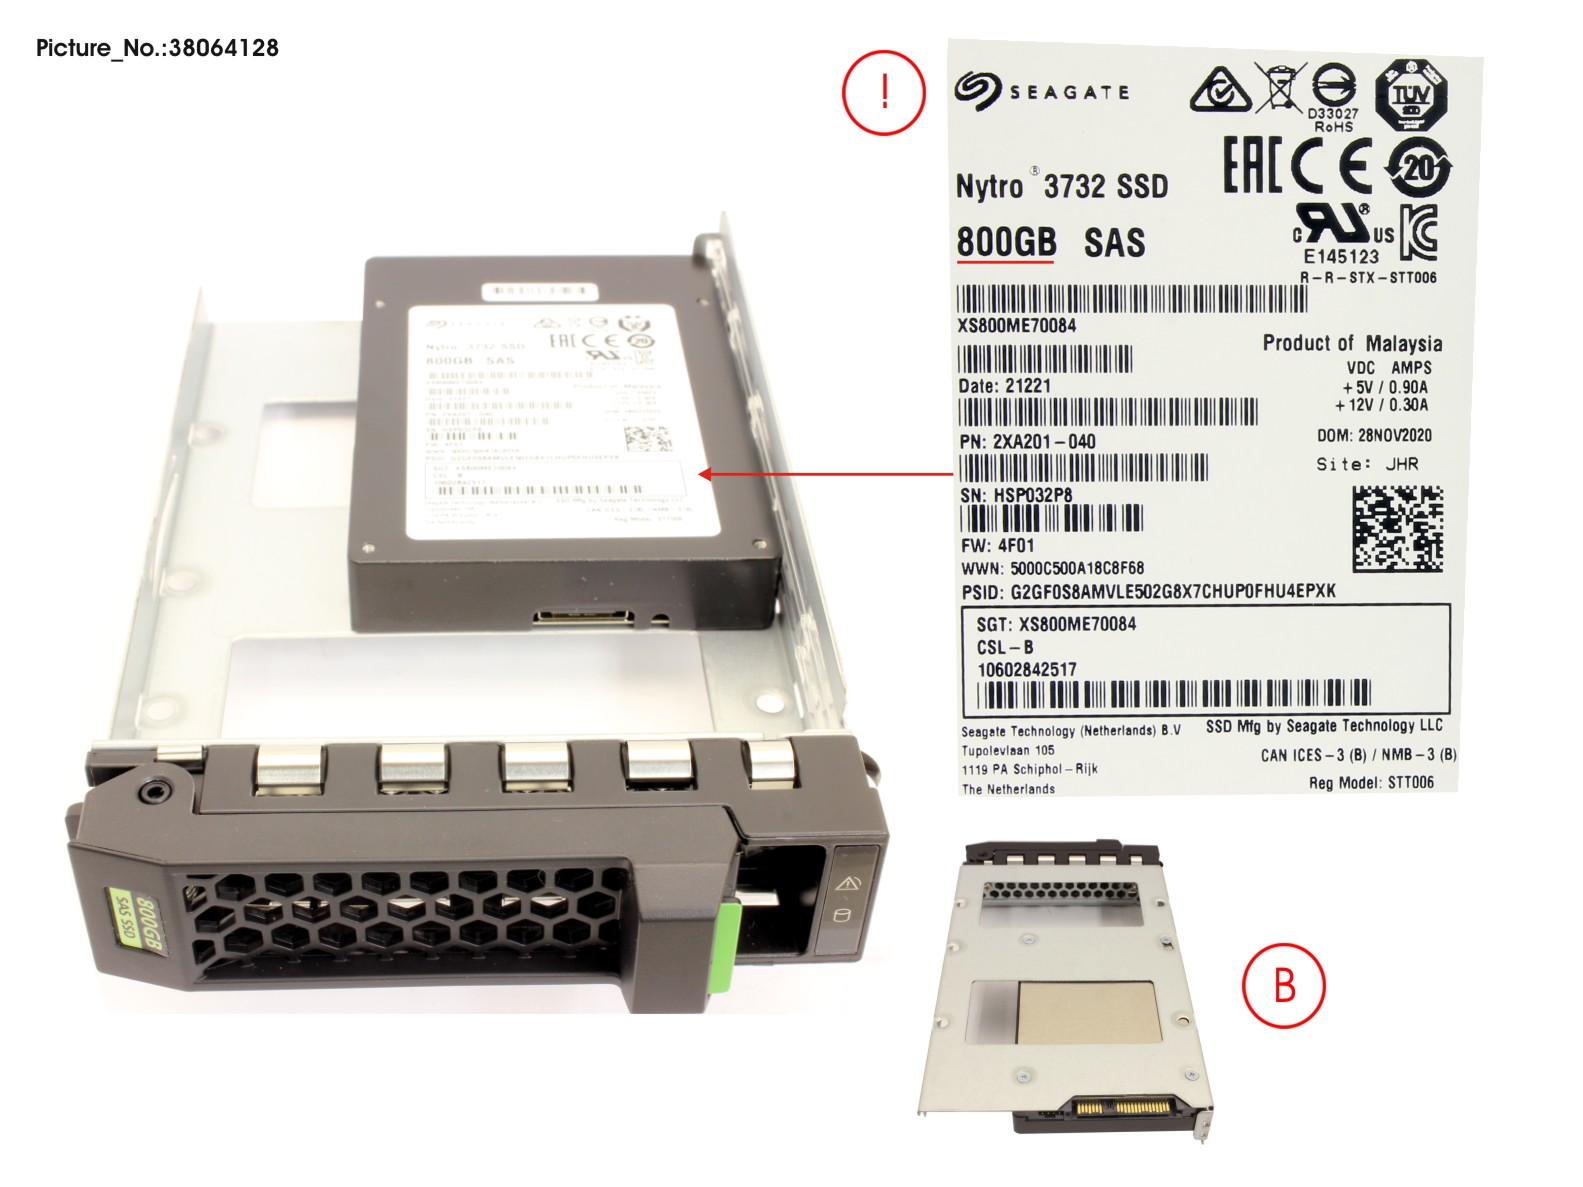 SSD SAS 12G WI 800GB IN LFF SLIM